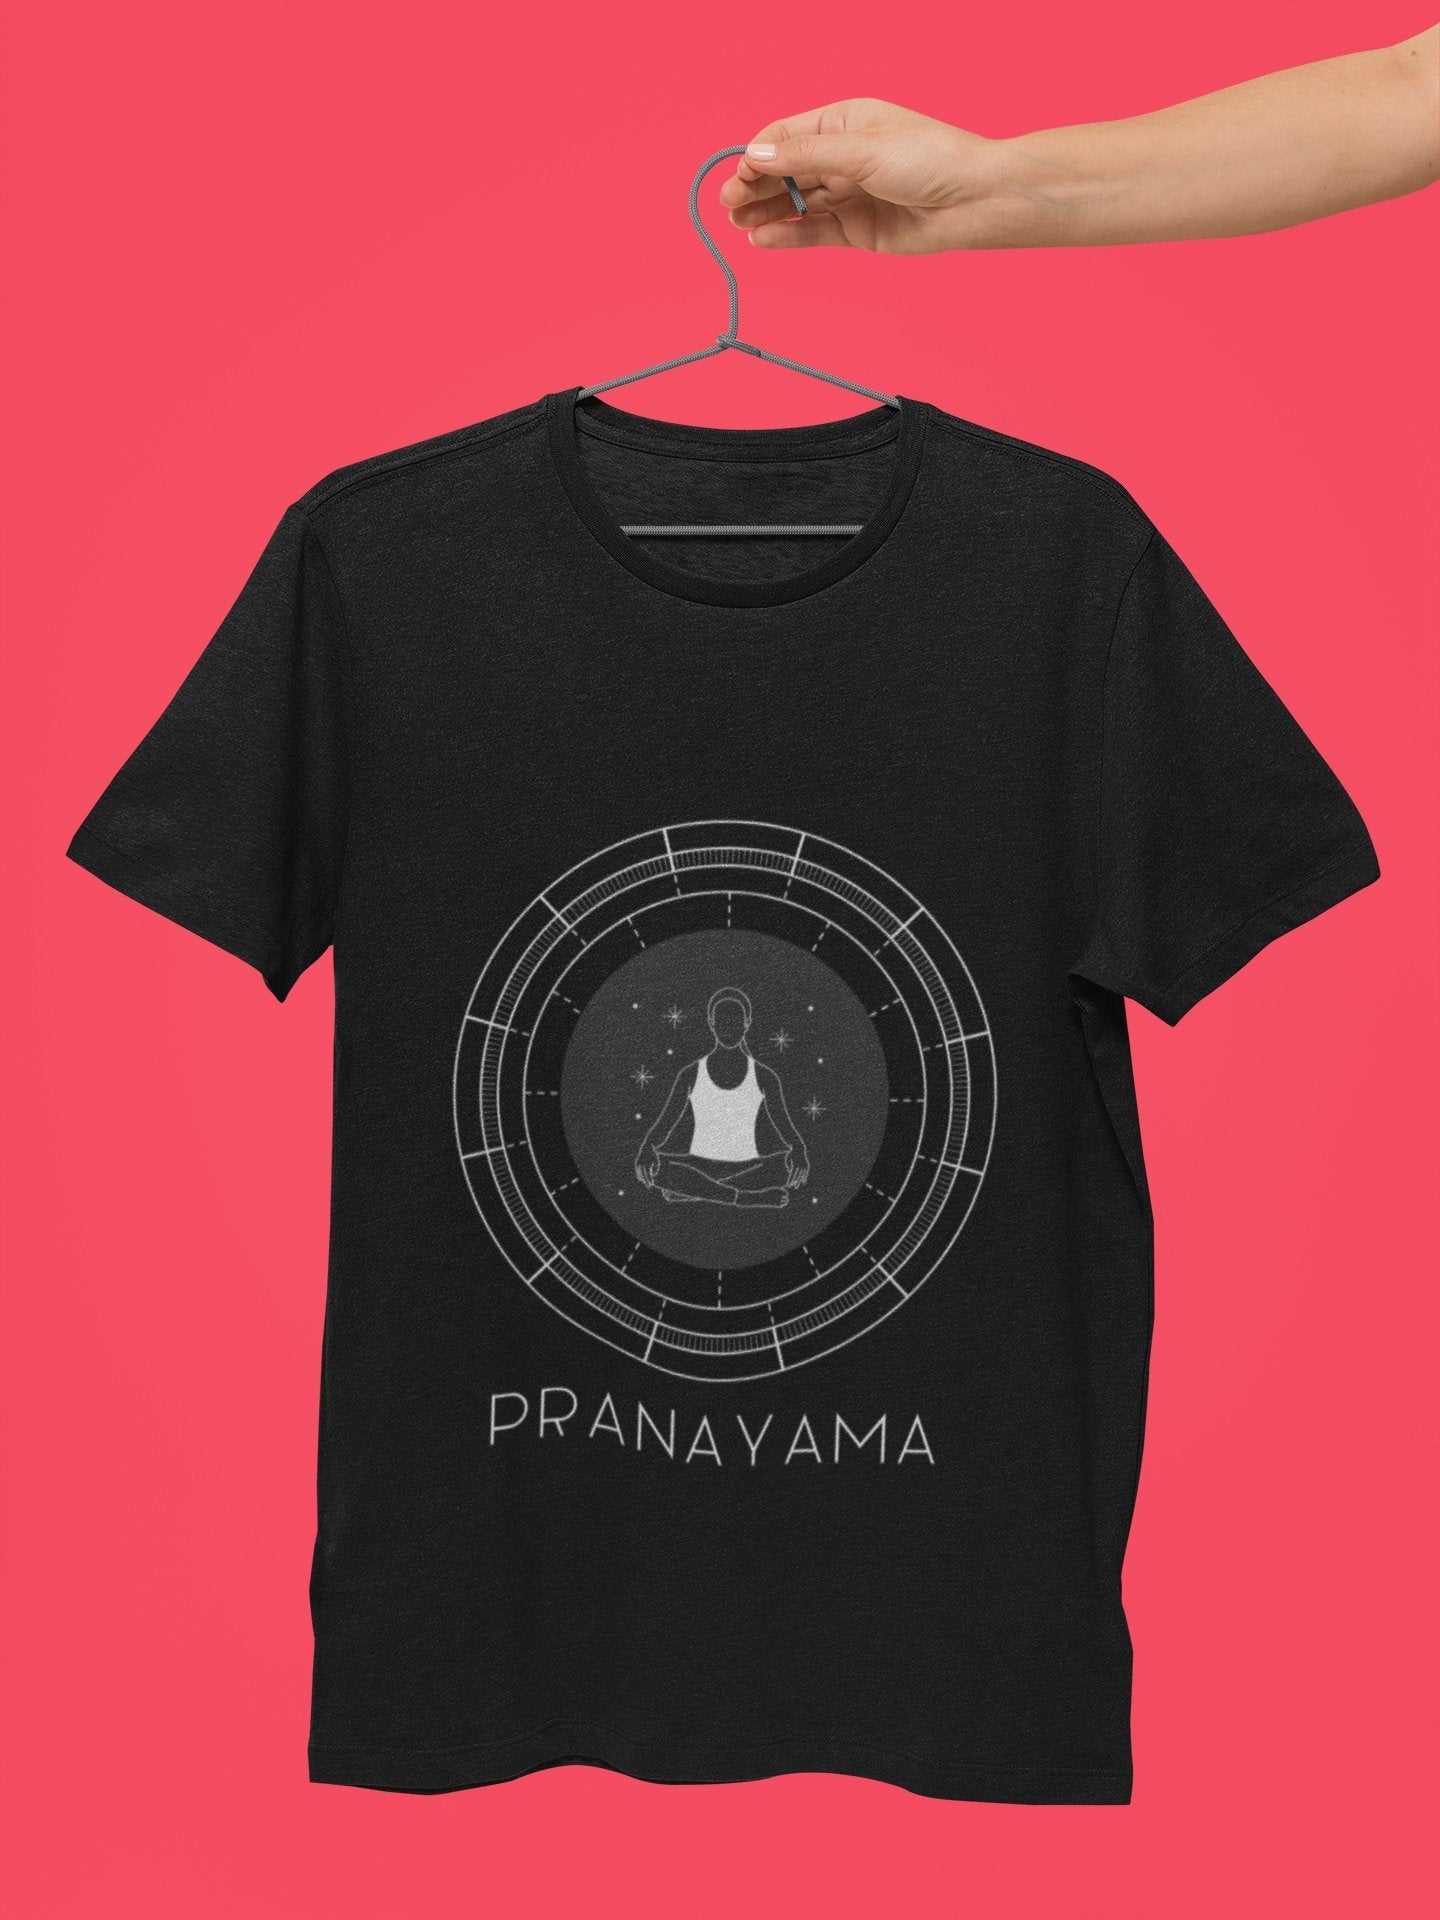 thelegalgang,Pranayama design Yoga T shirt for Men,MEN.